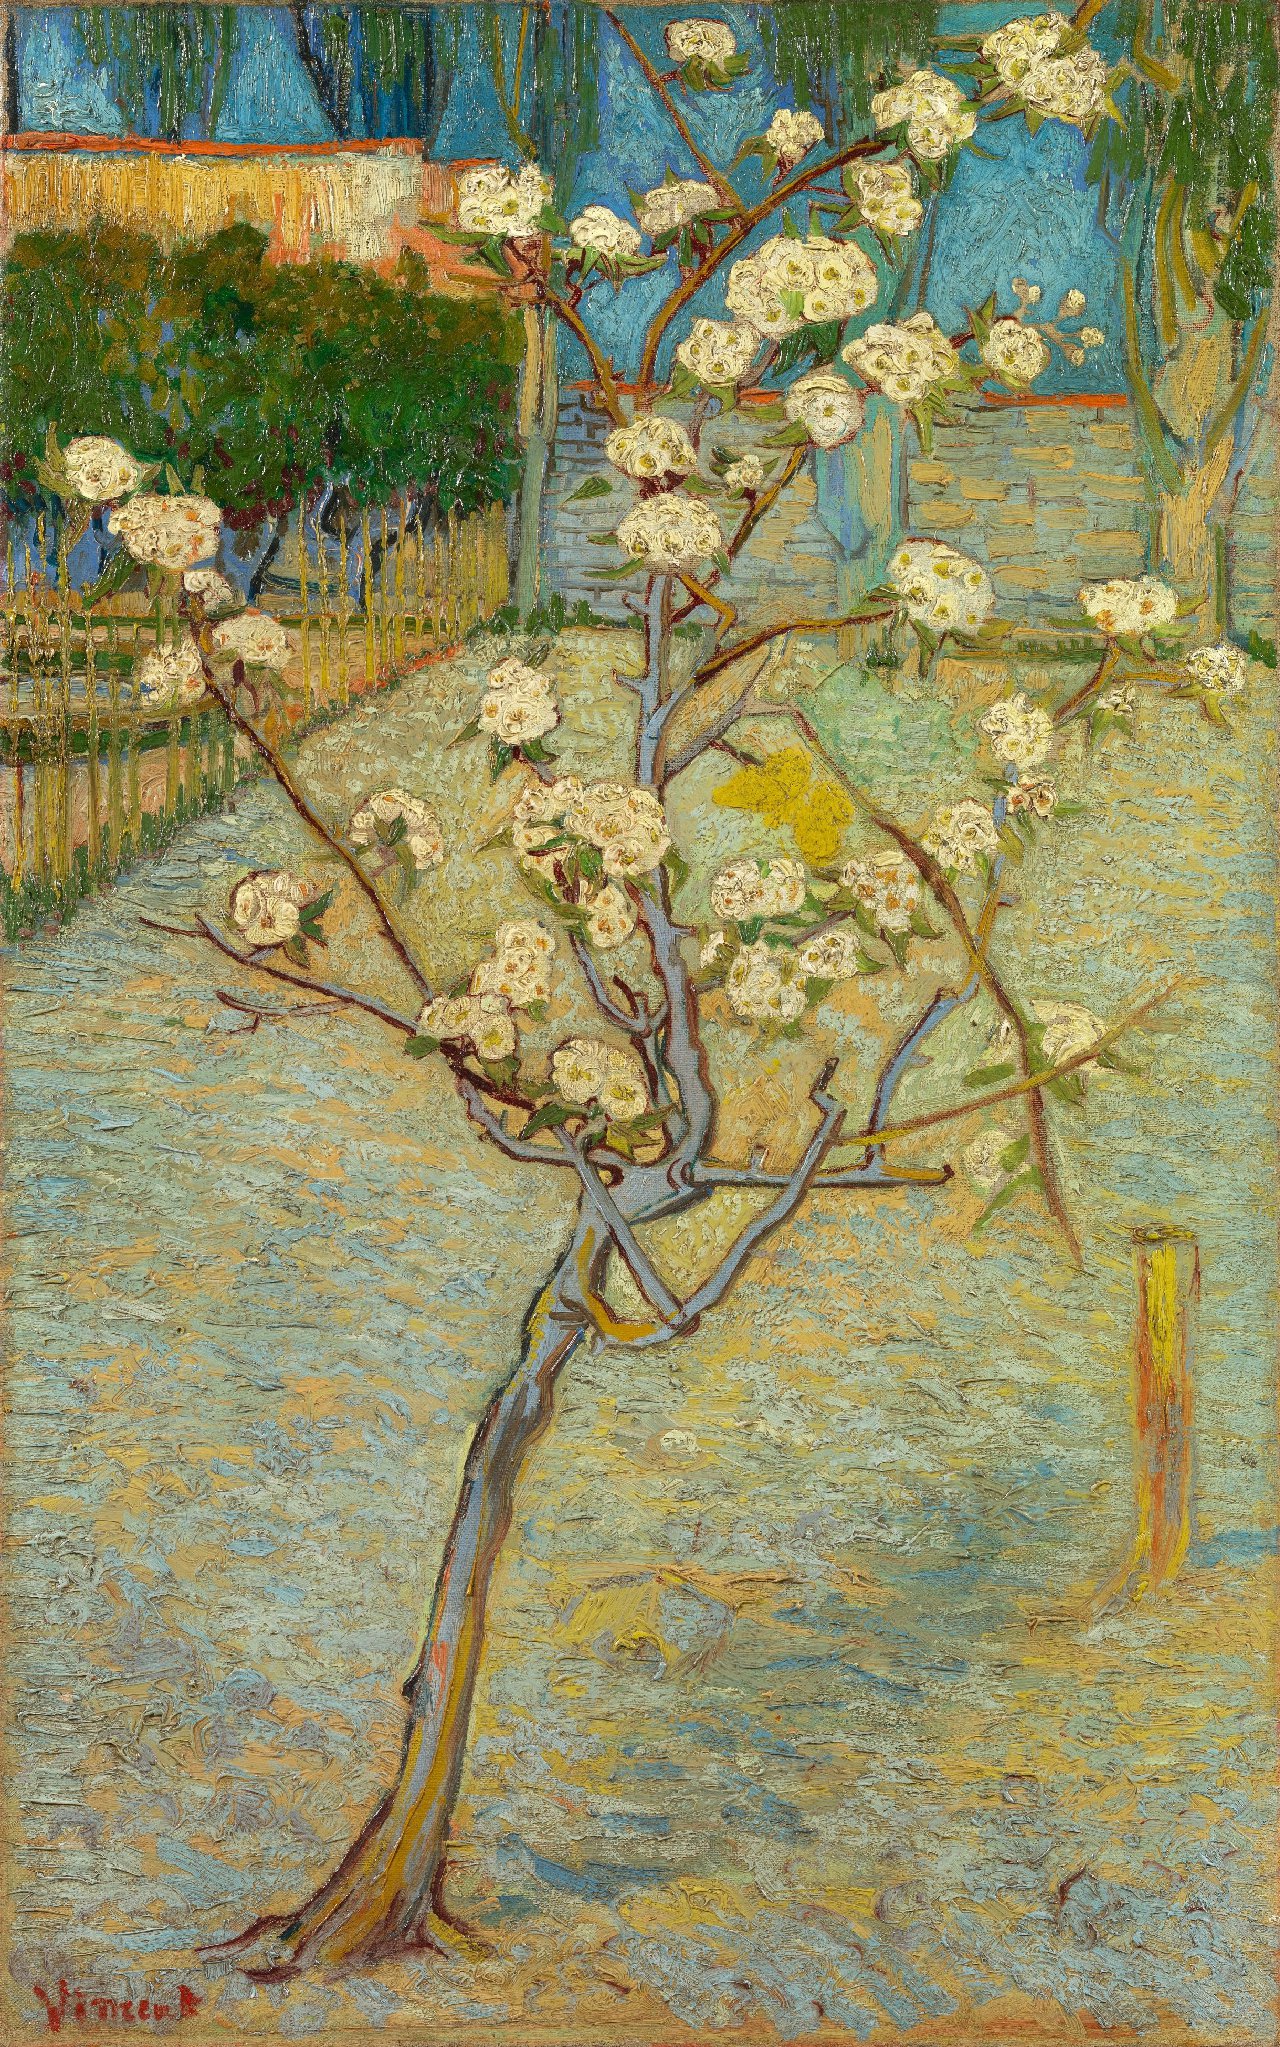 Çiçek Açmış Küçük Armut Ağacı by Vincent van Gogh - Nisan 1888 - 73.6 x 46.3 cm Van Gogh Müzesi